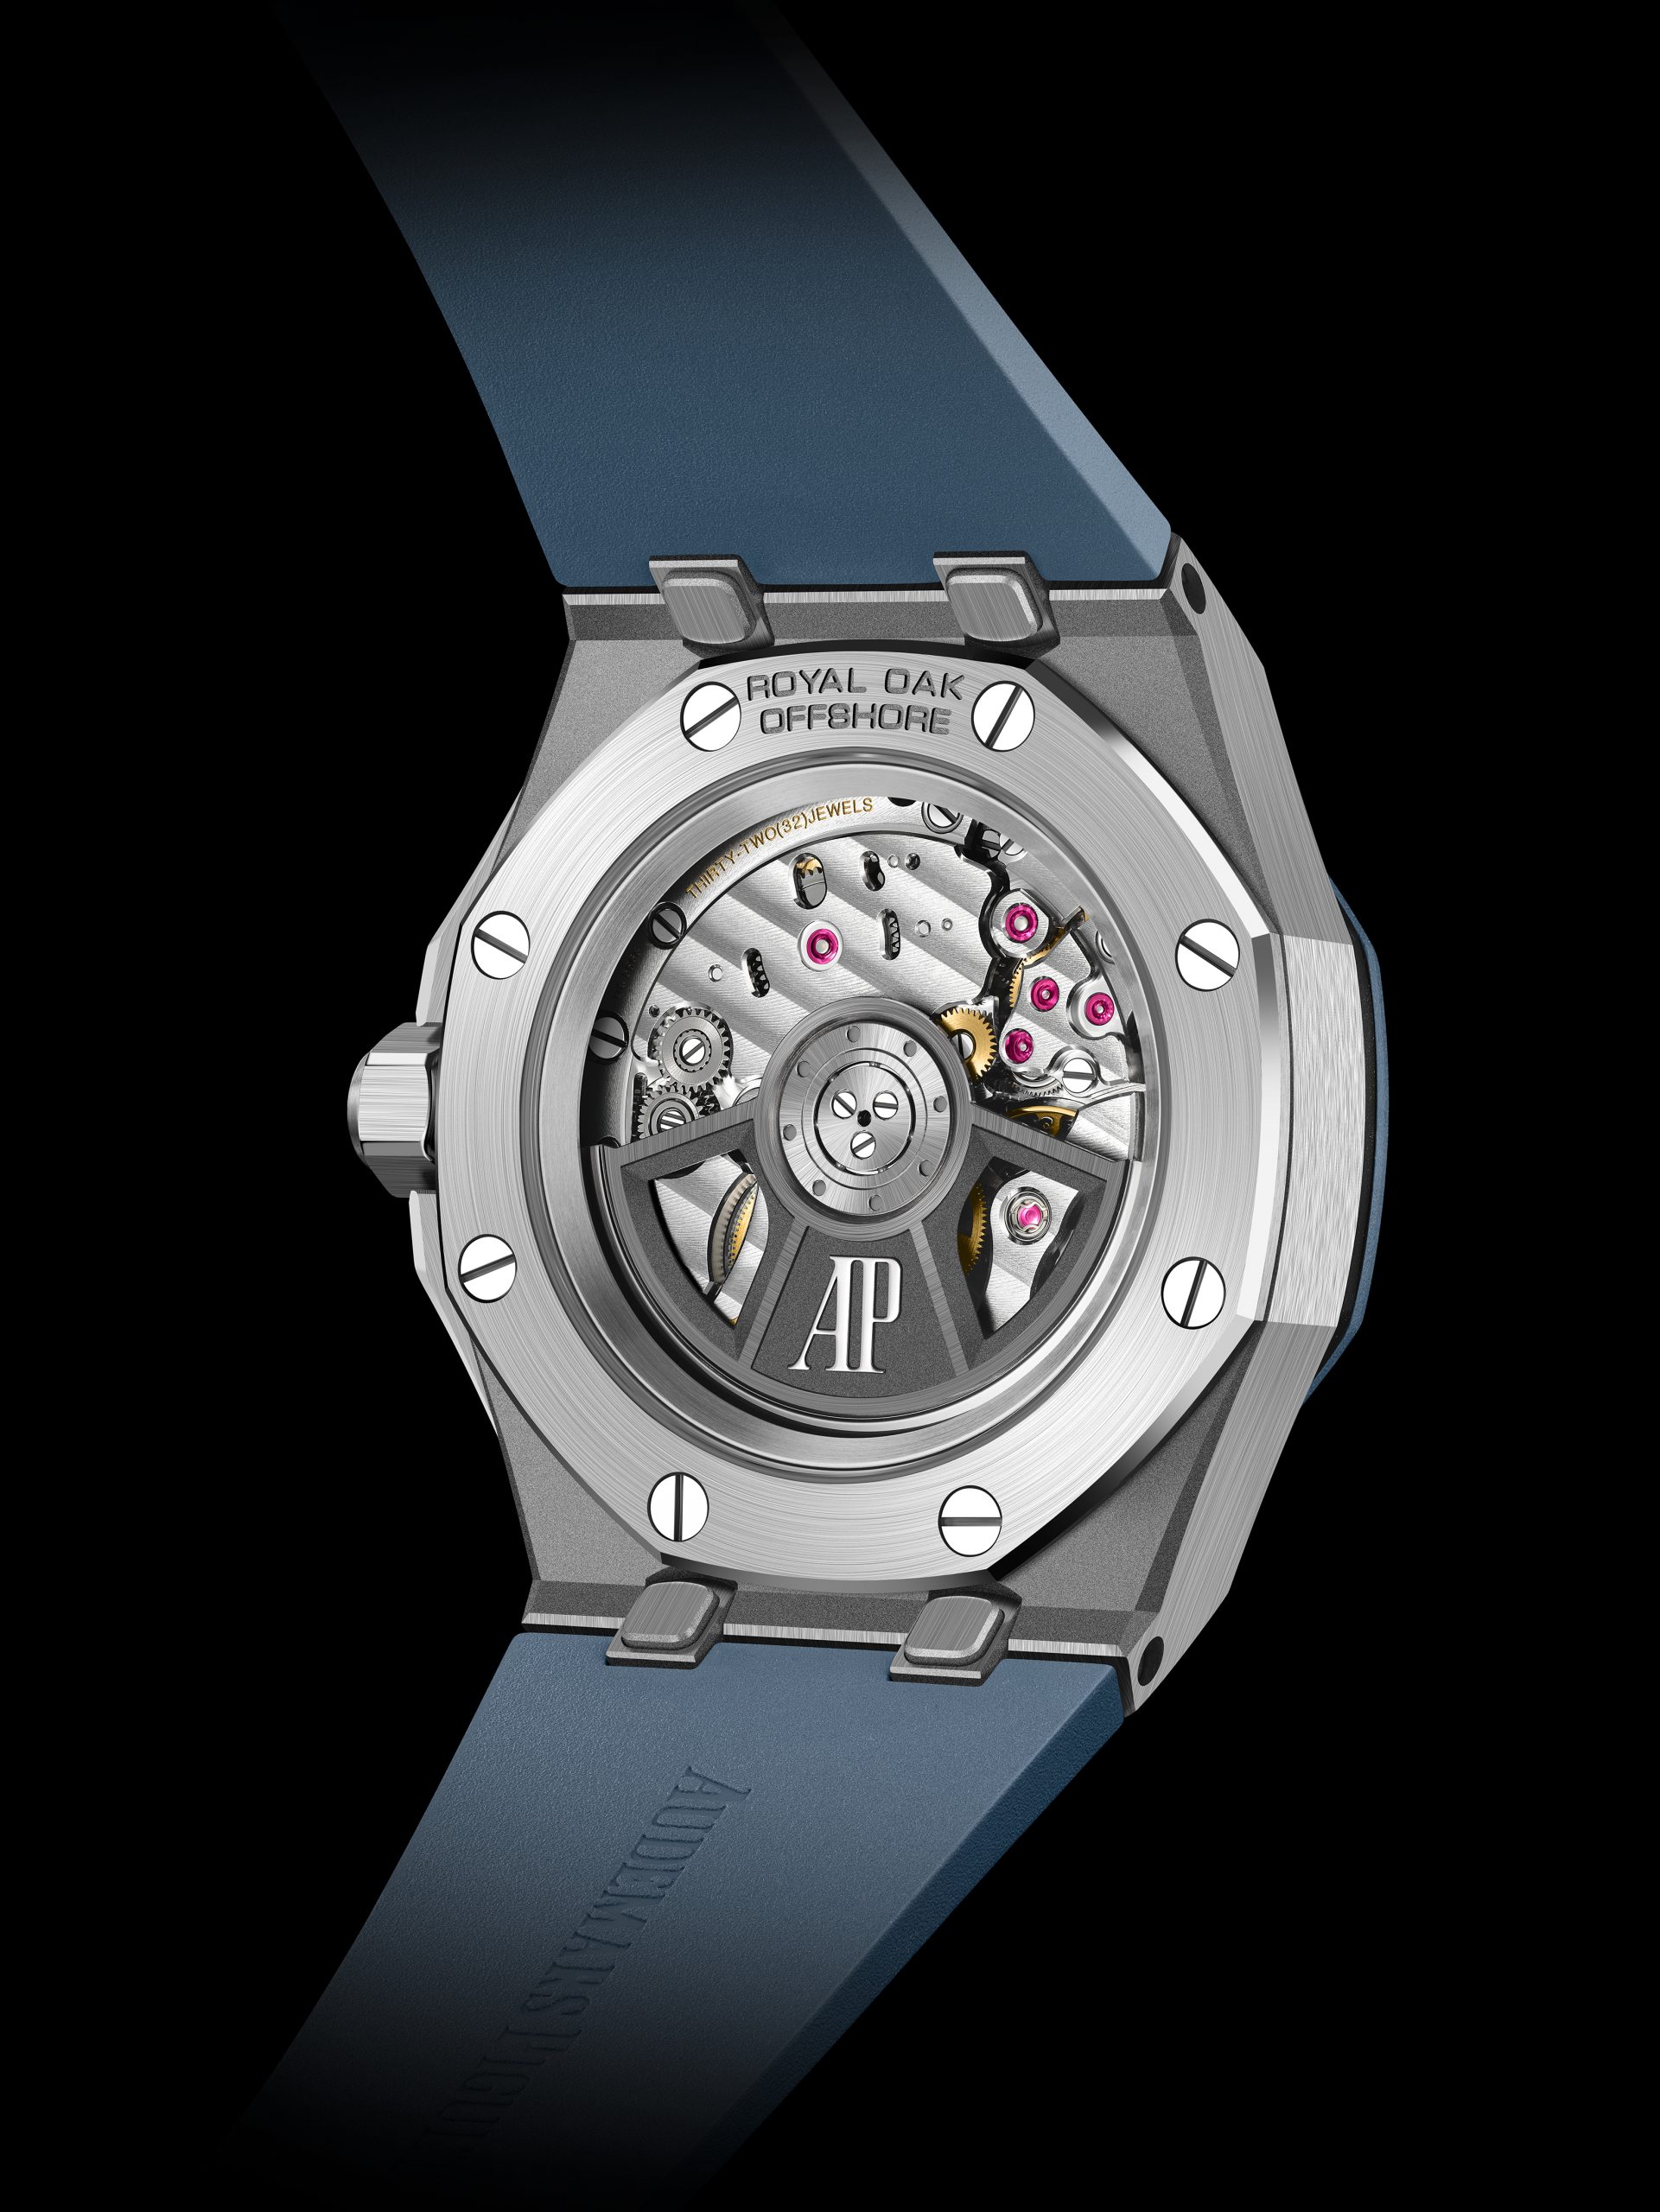 Audmars Piguet Royal Oak Offshore 精鋼運動錶錶背，透視4302自動機芯